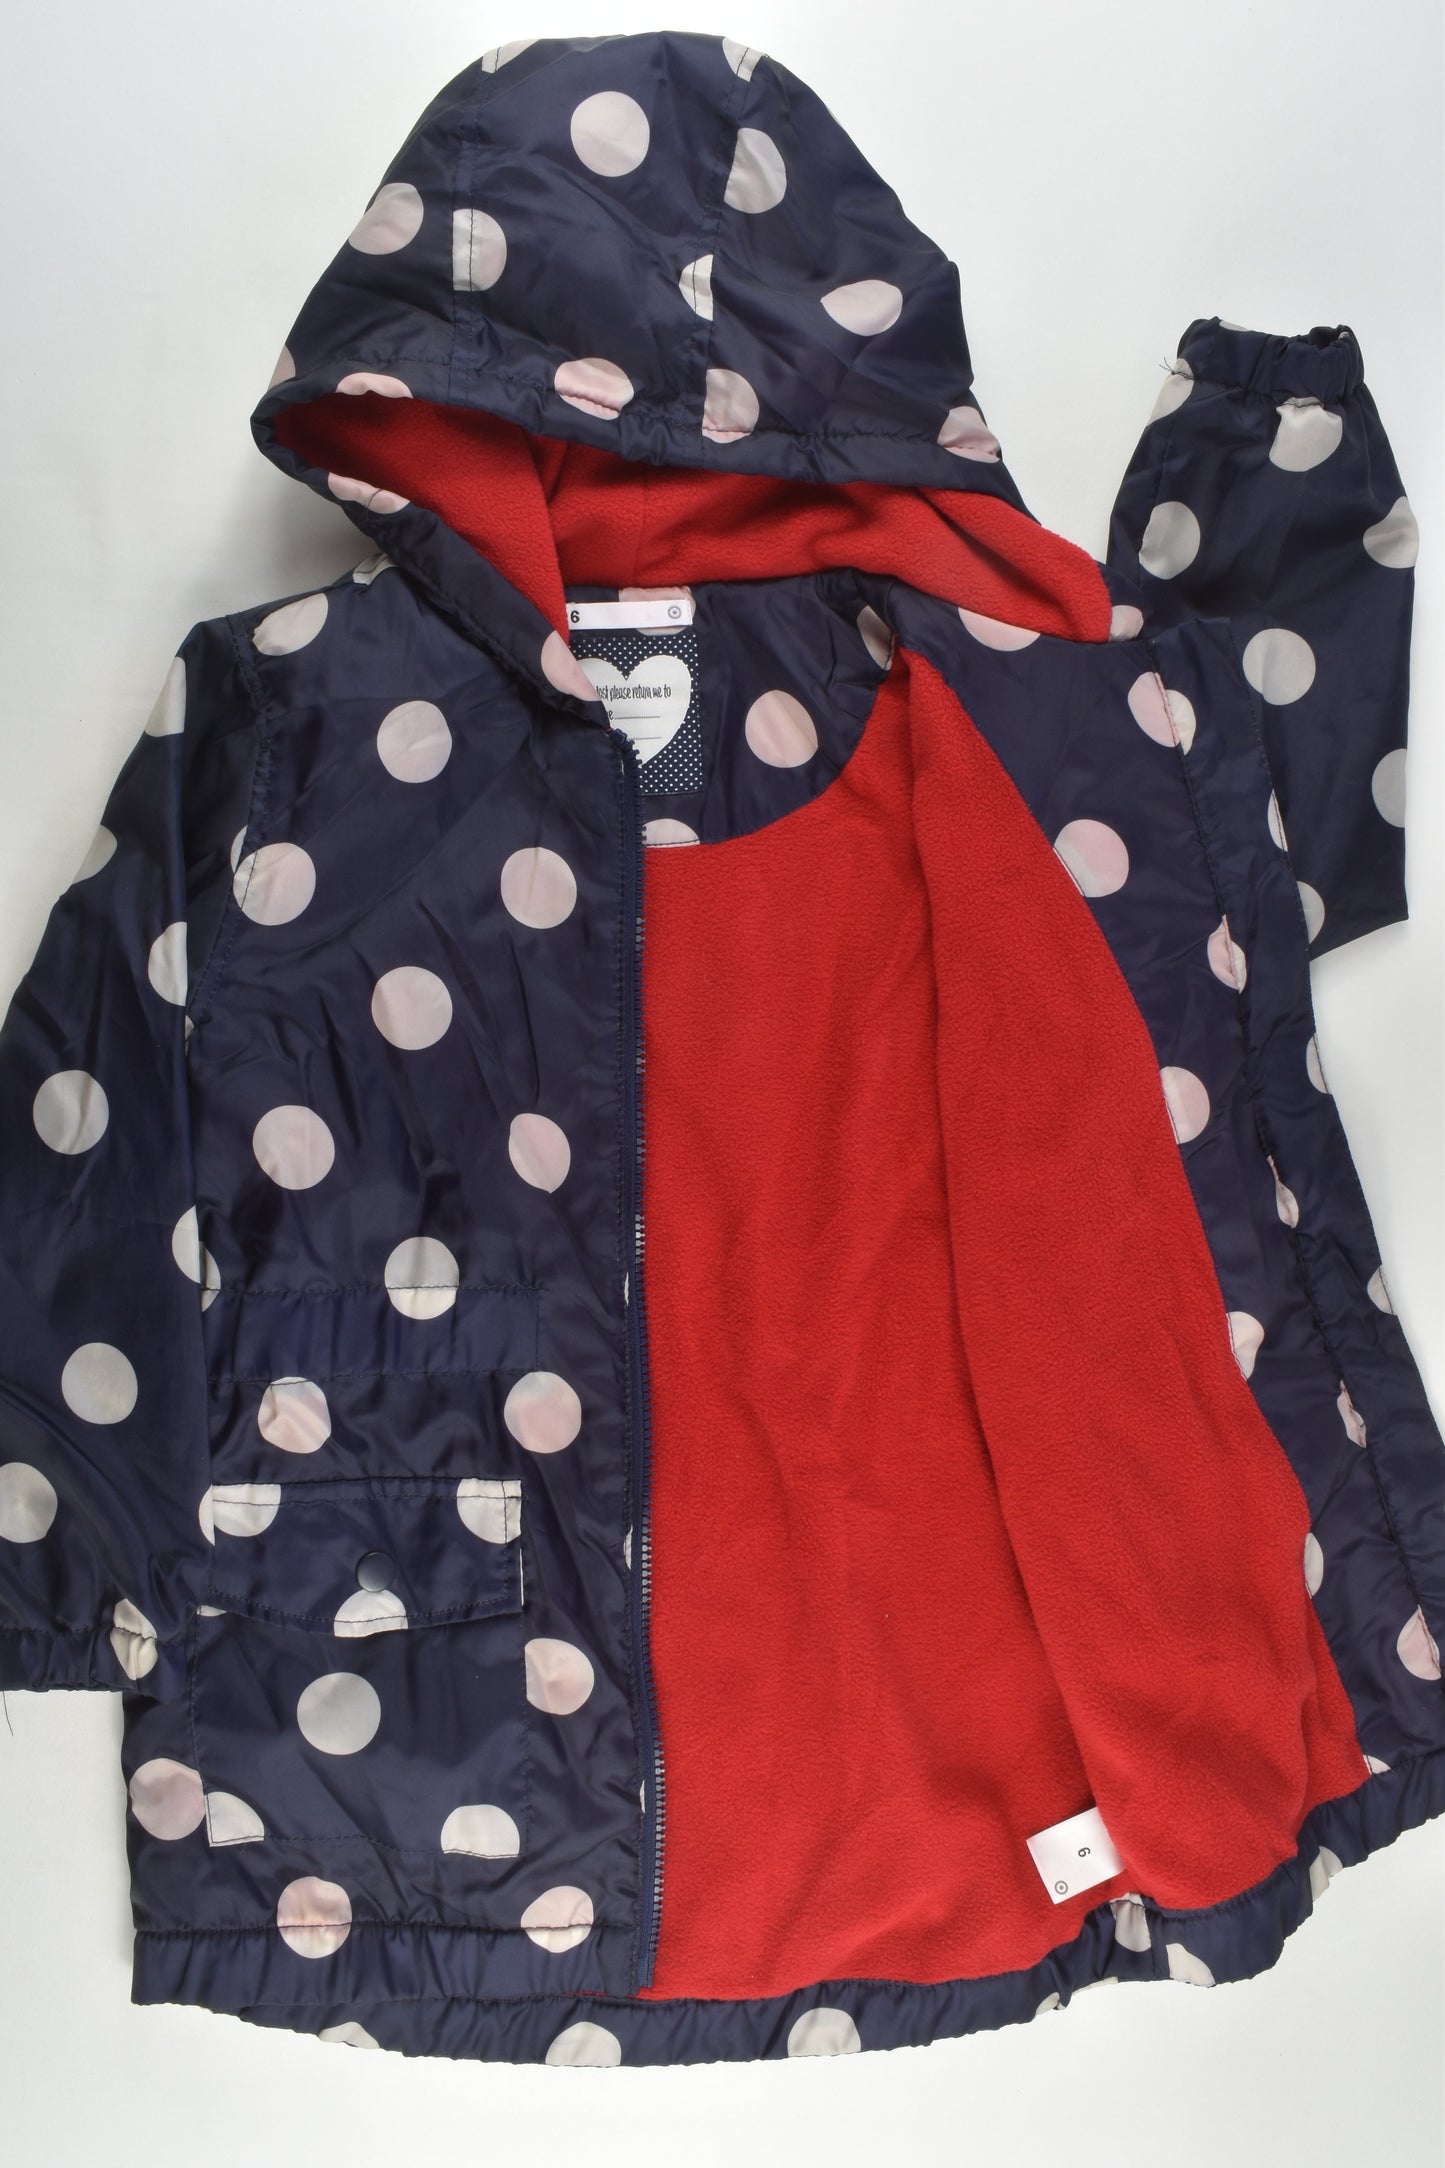 Target Size 6 Polka Dots Fleece Lined Jacket